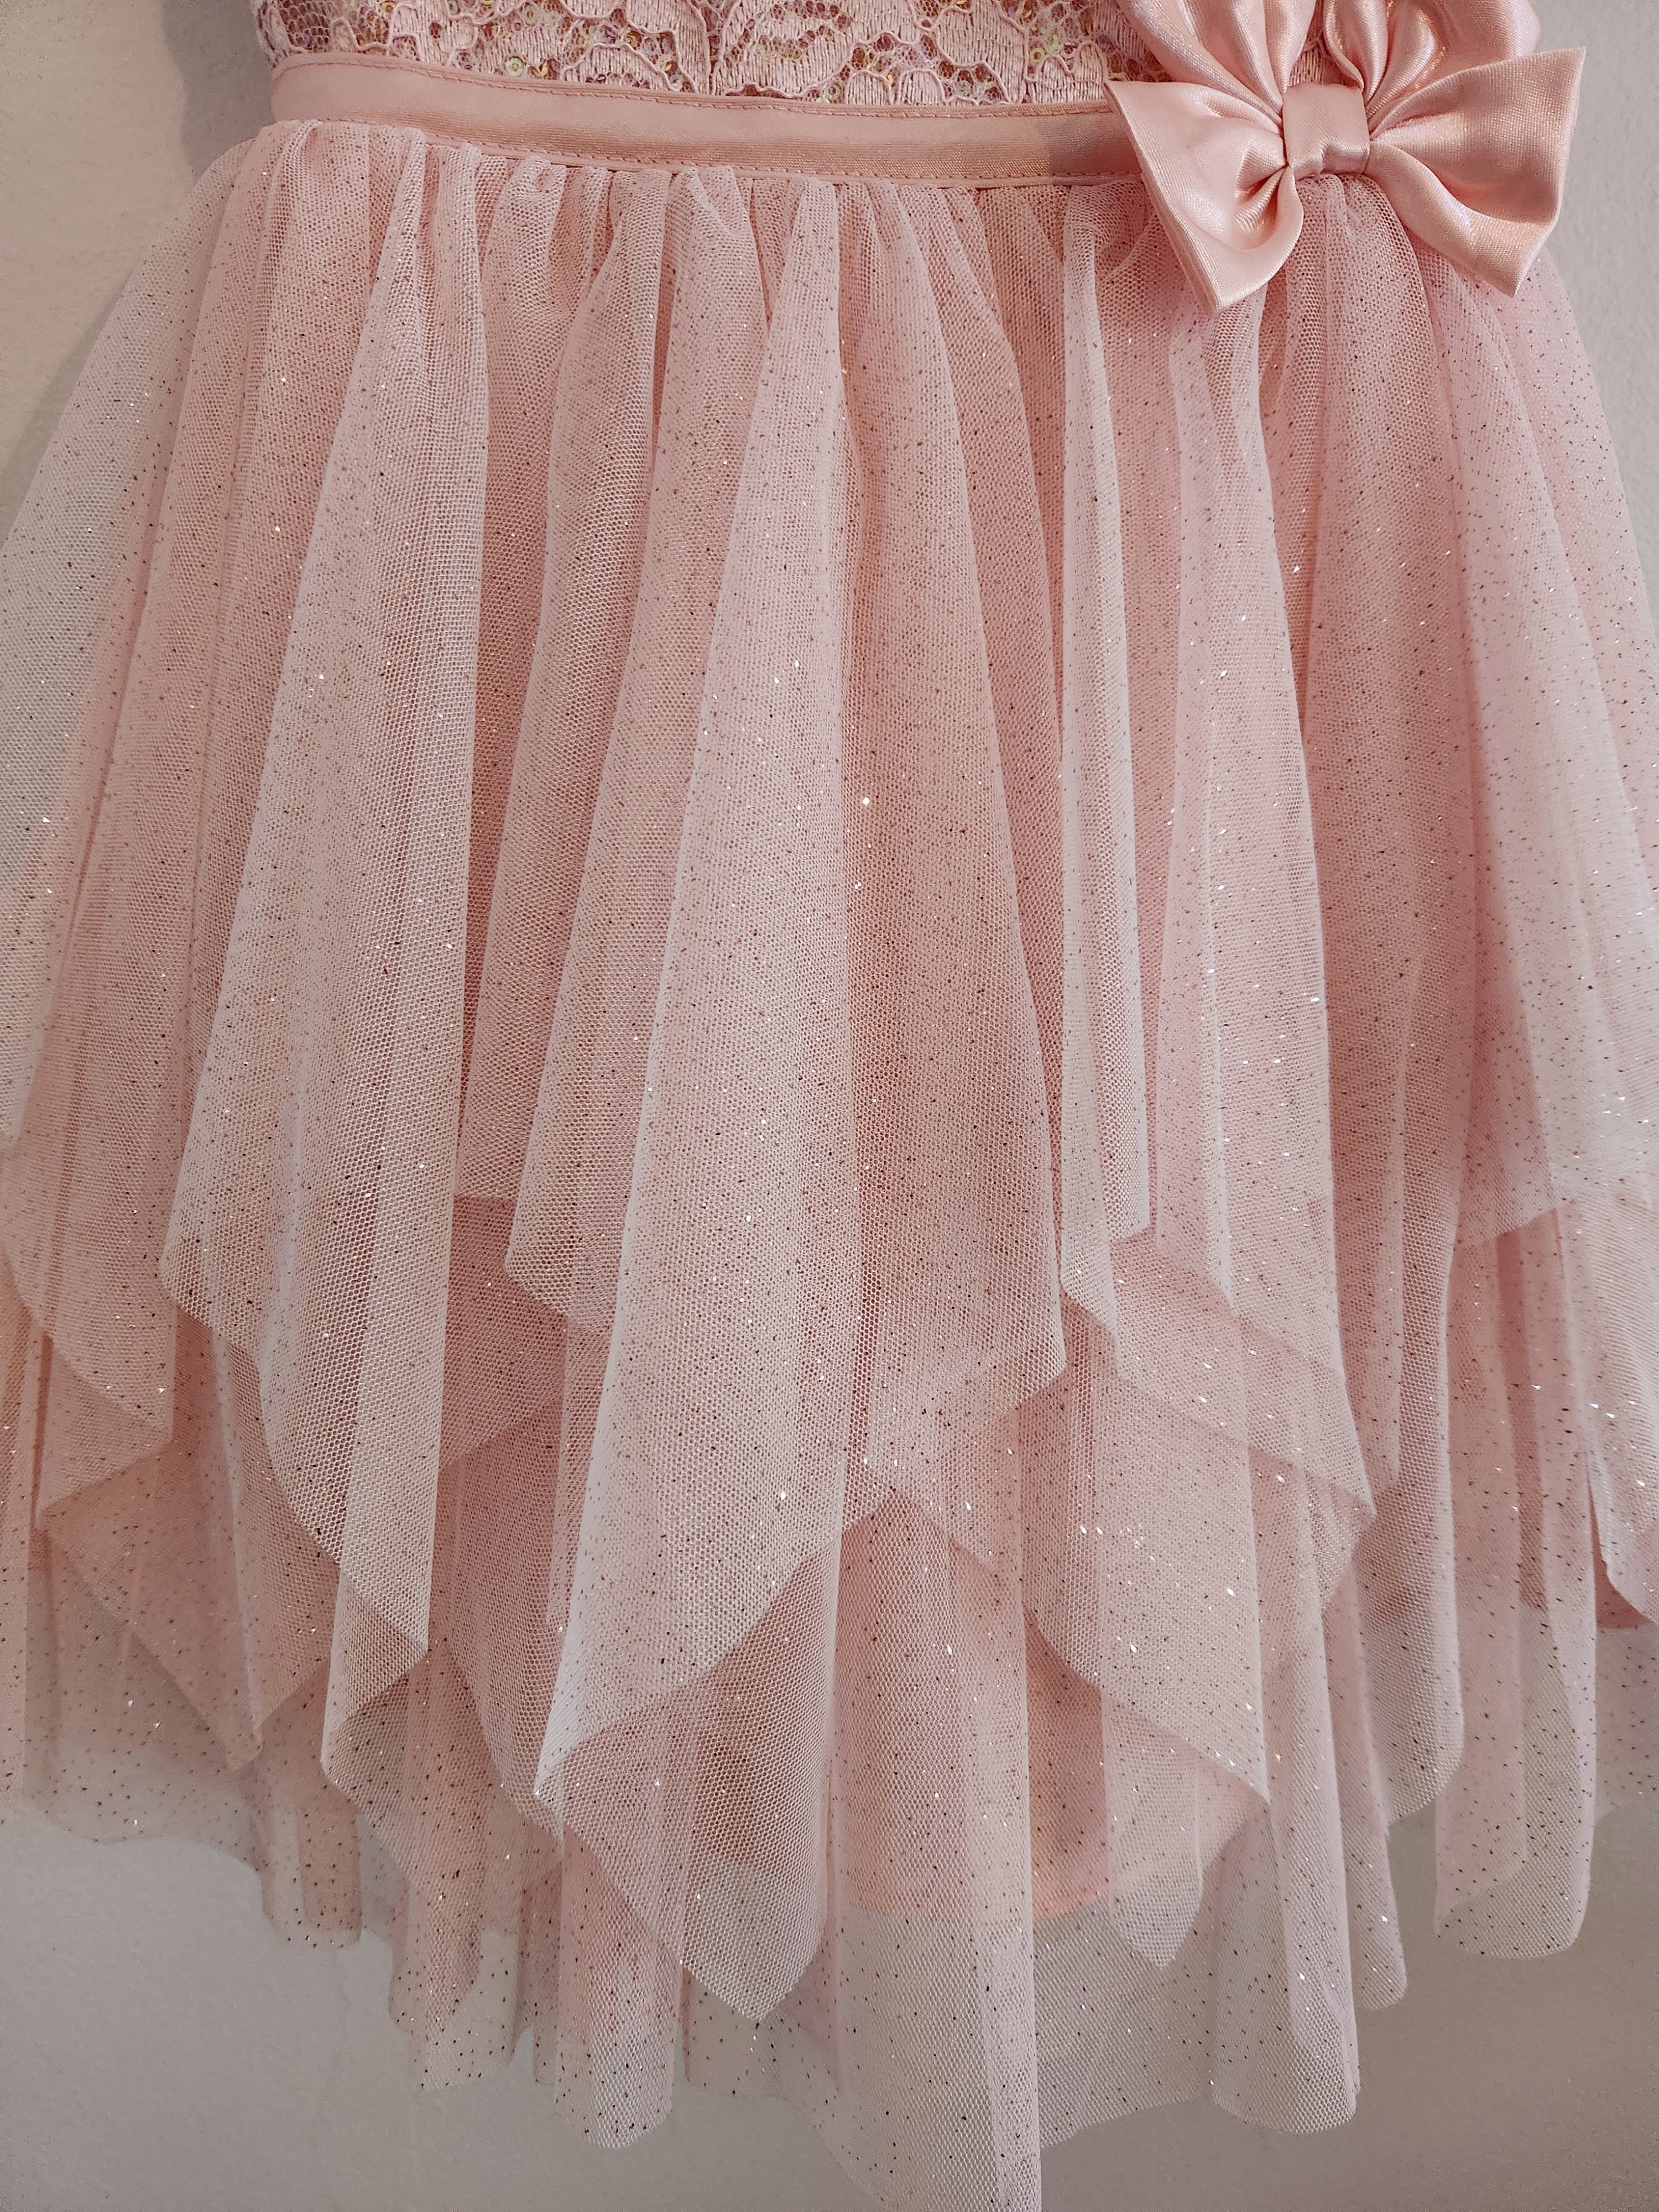 Quintessential Qamar (Size 3T) Girl's Dress